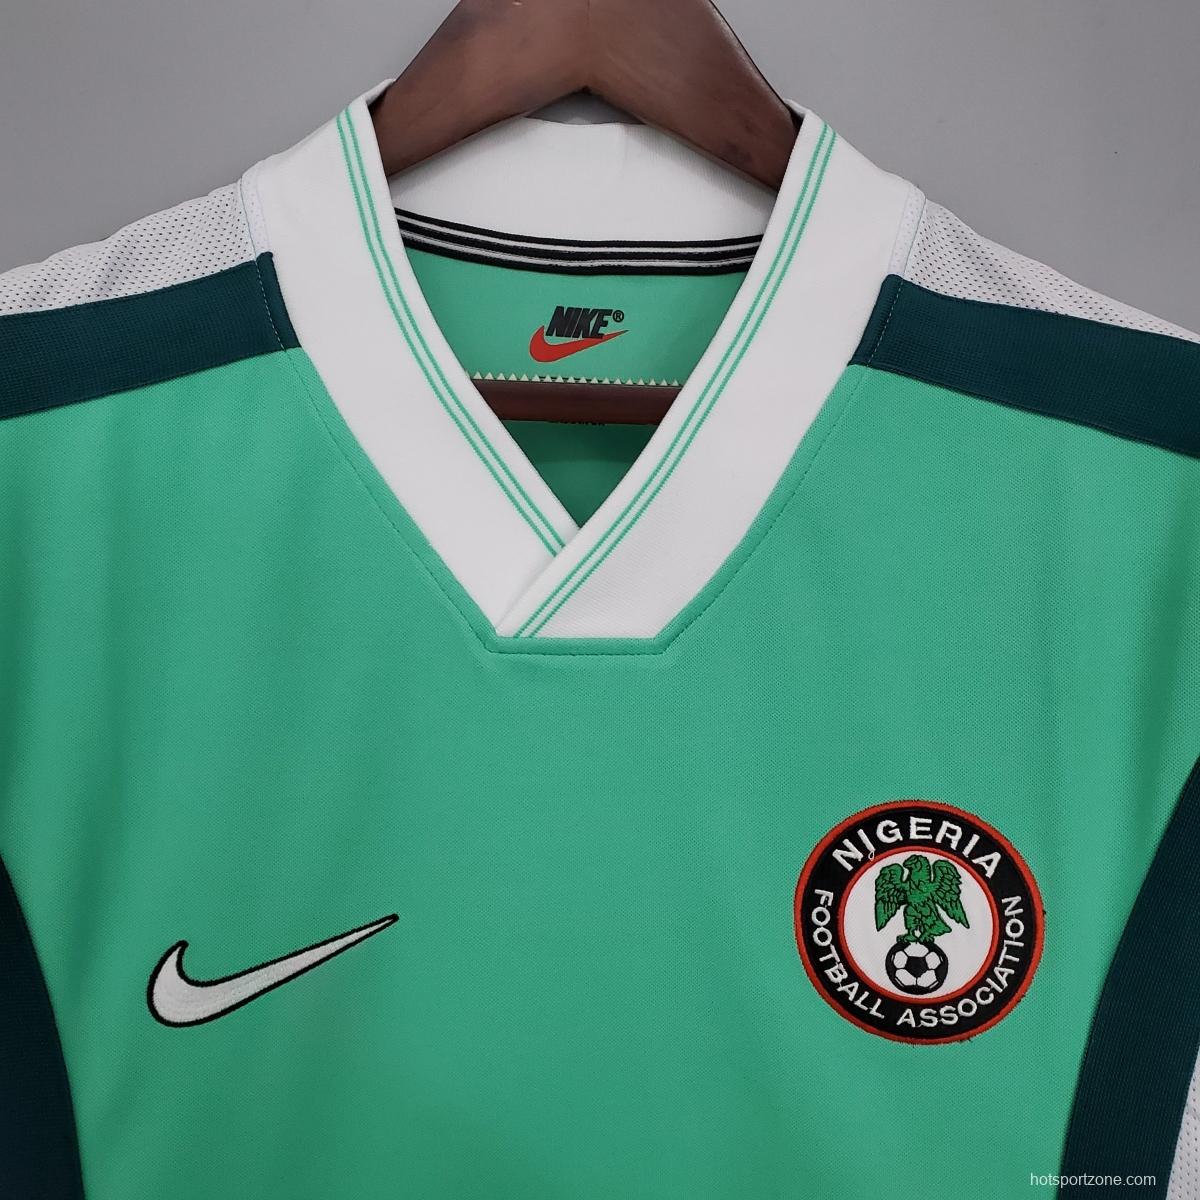 Retro Nigeria 1998 home Soccer Jersey